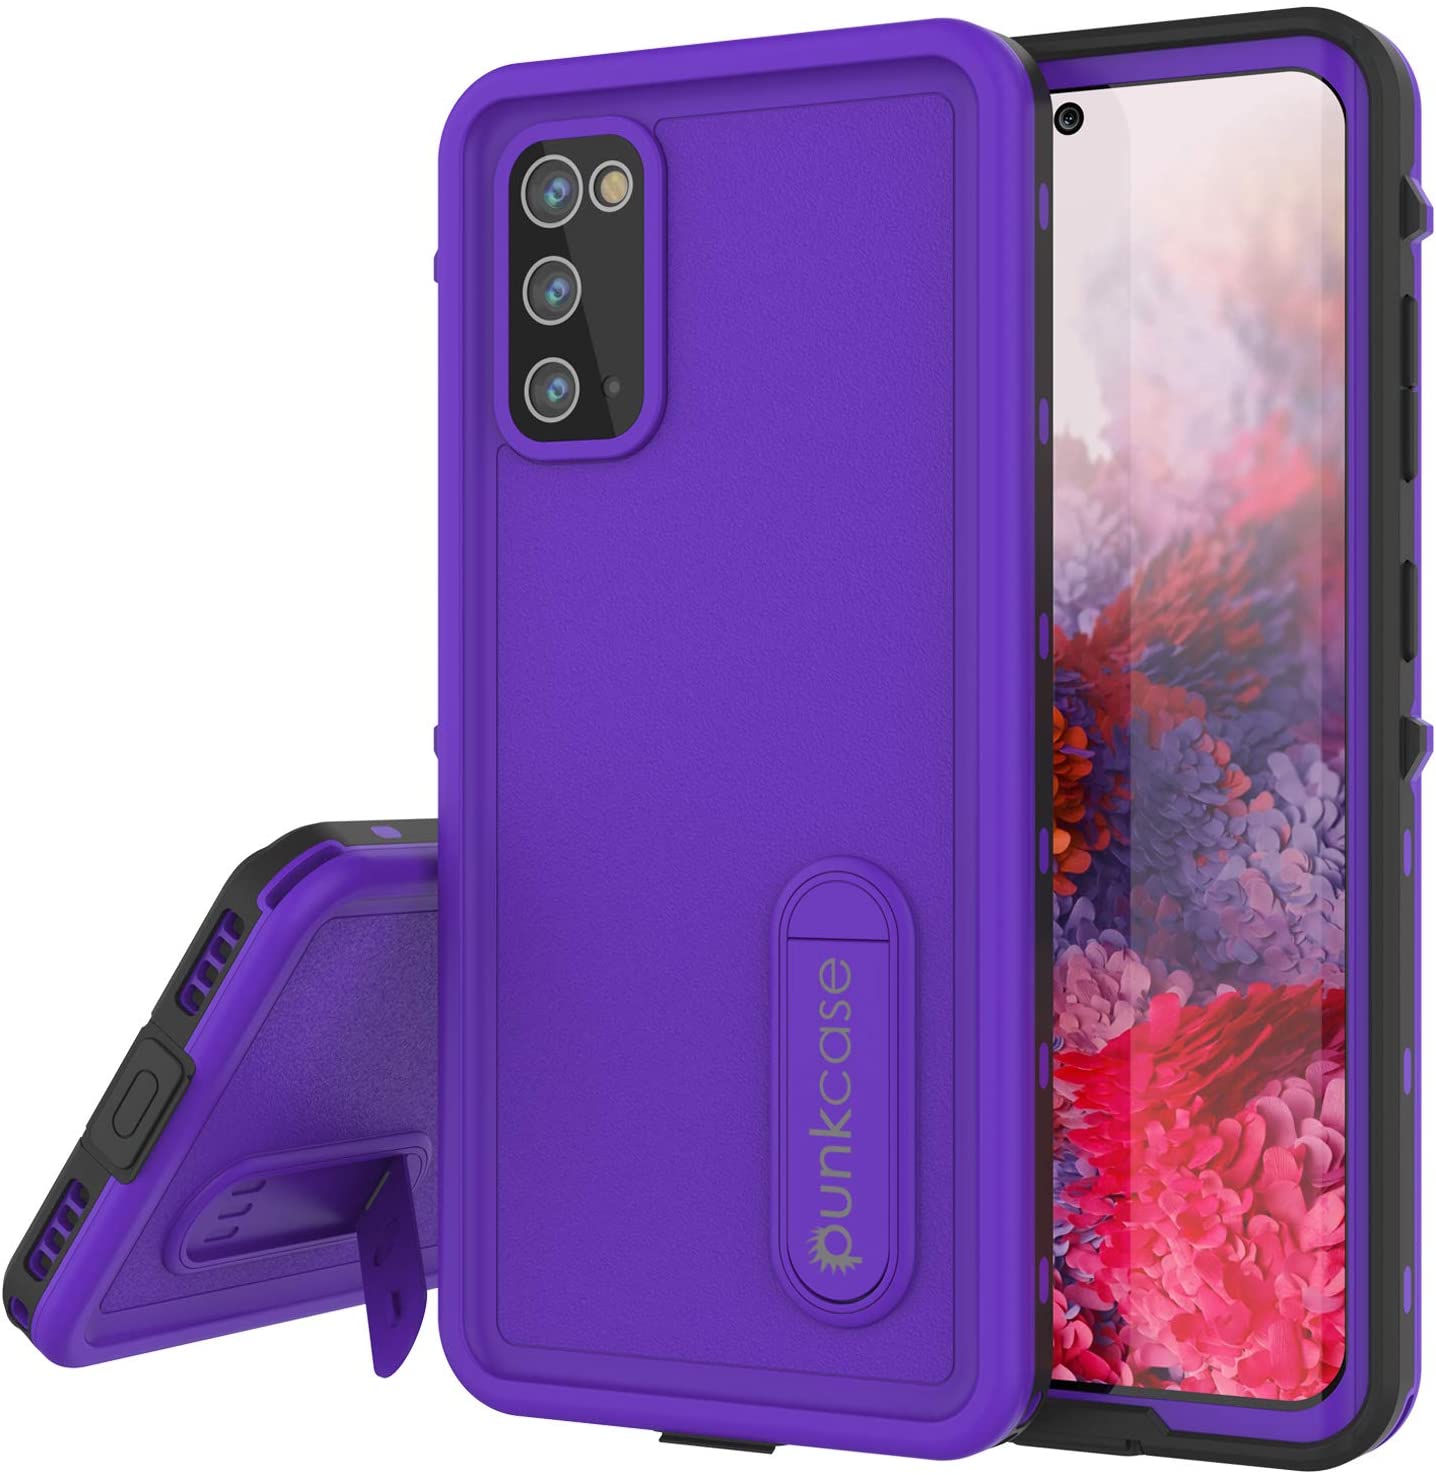 Galaxy S20 Waterproof Case, Punkcase [KickStud Series] Armor Cover [Purple] (Color in image: Purple)